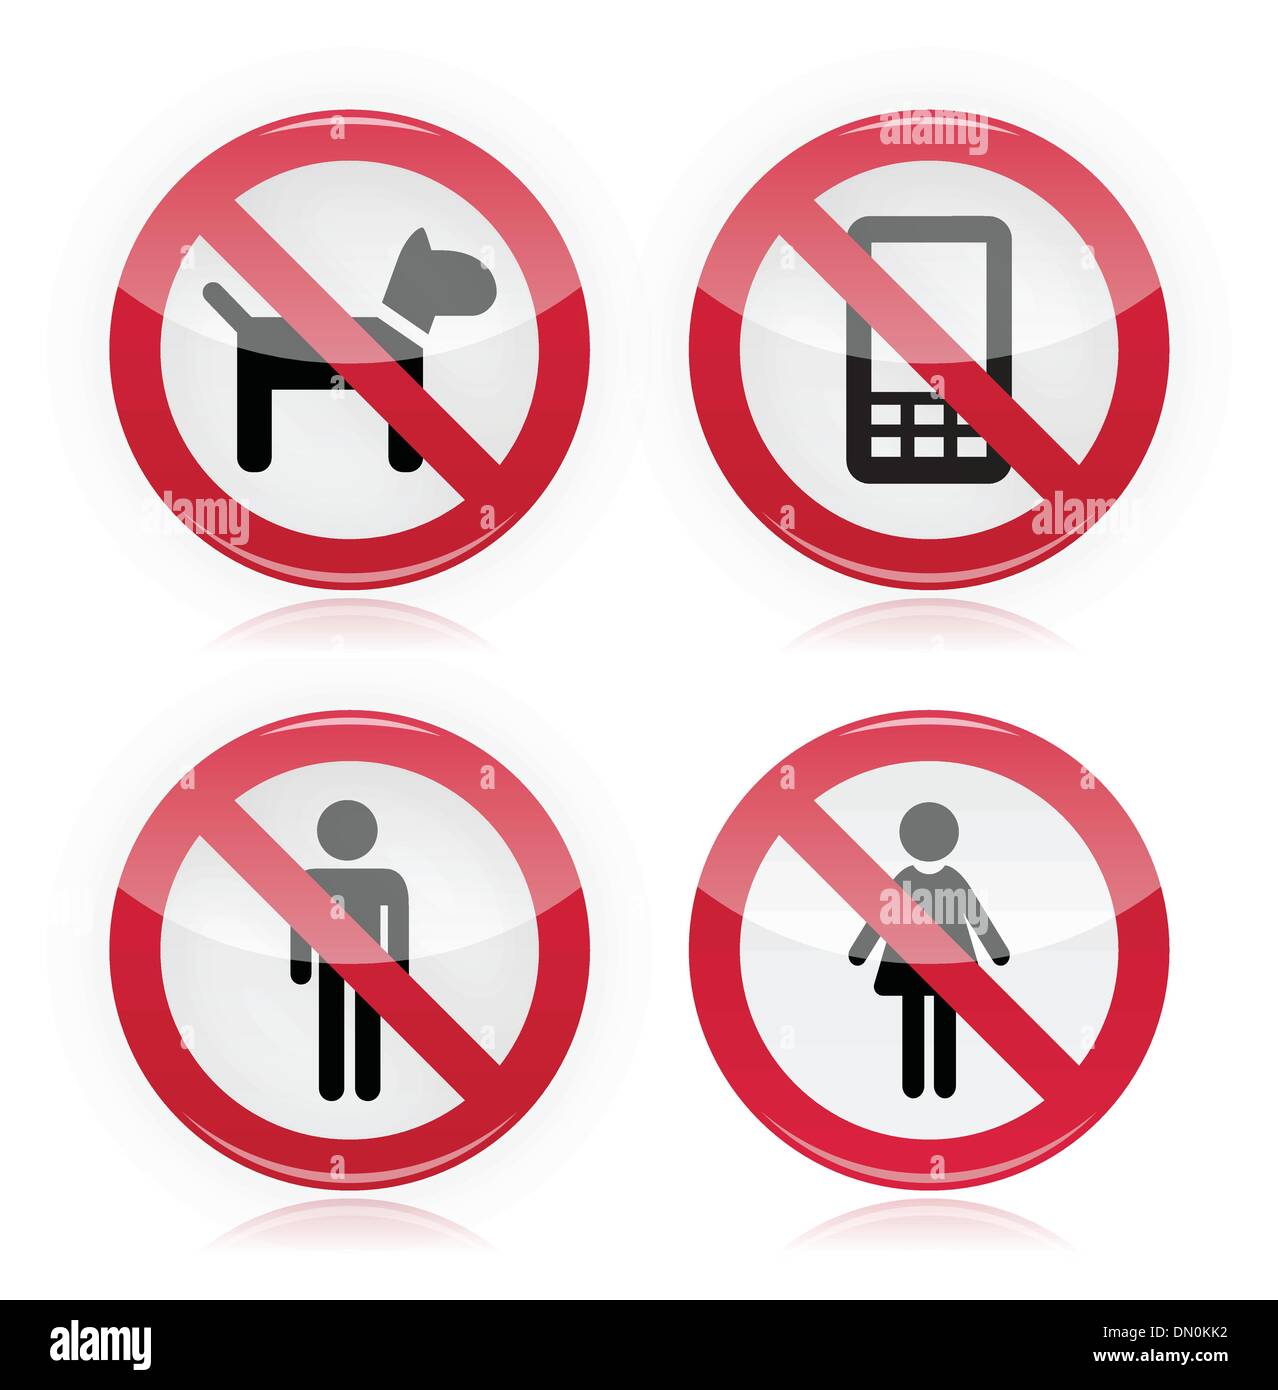 No dogs, No mobile phones, No men, No women warning sign - road sign Stock Vector